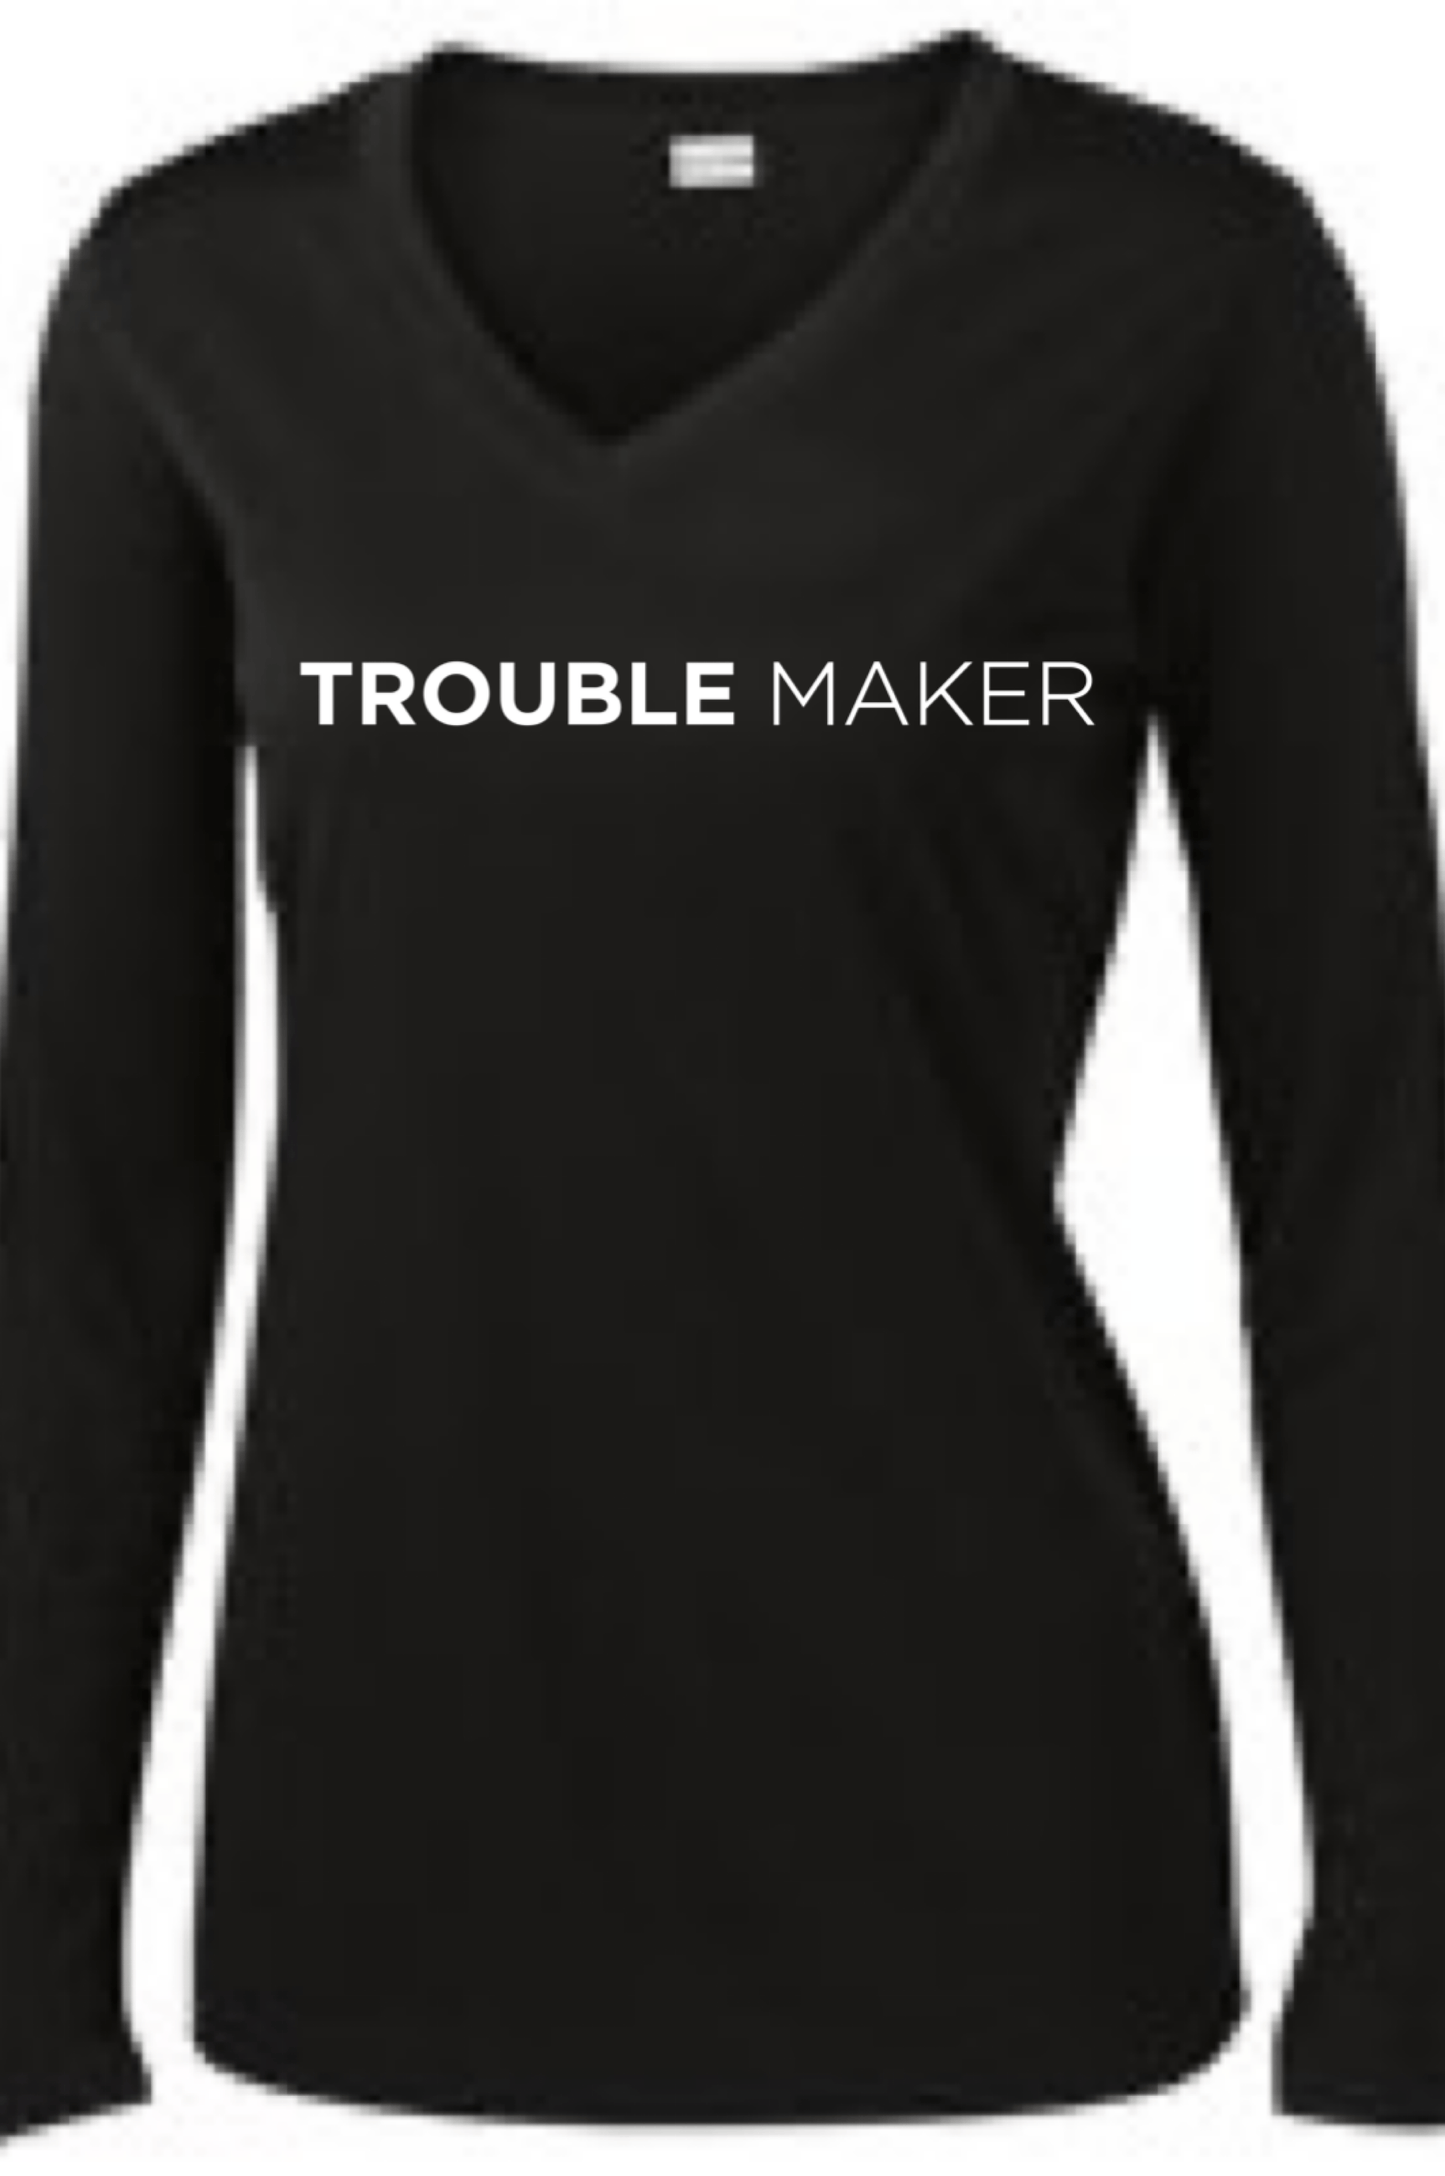 Black Trouble Maker Long Sleeve T shirt 